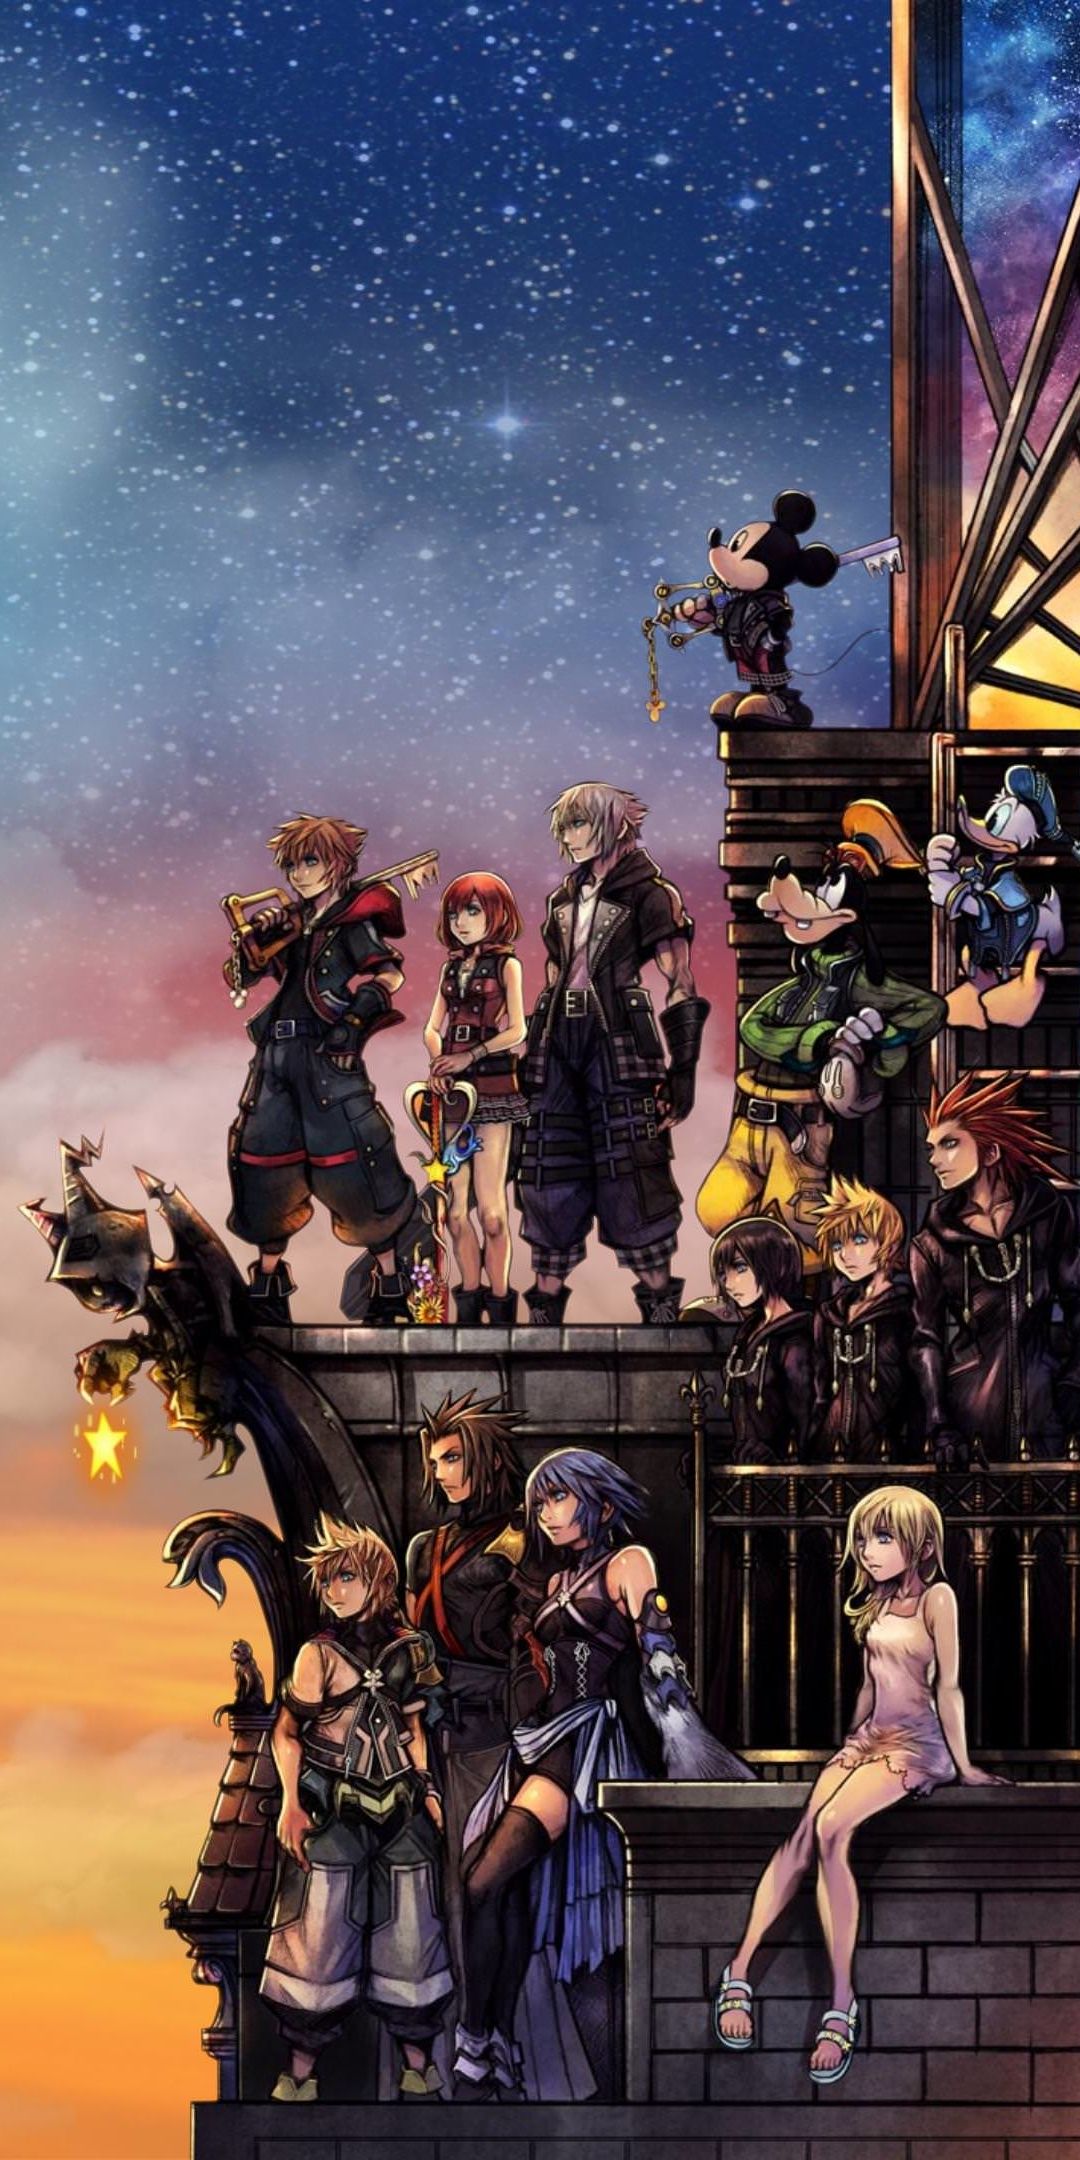 Kingdom Hearts Phone Background